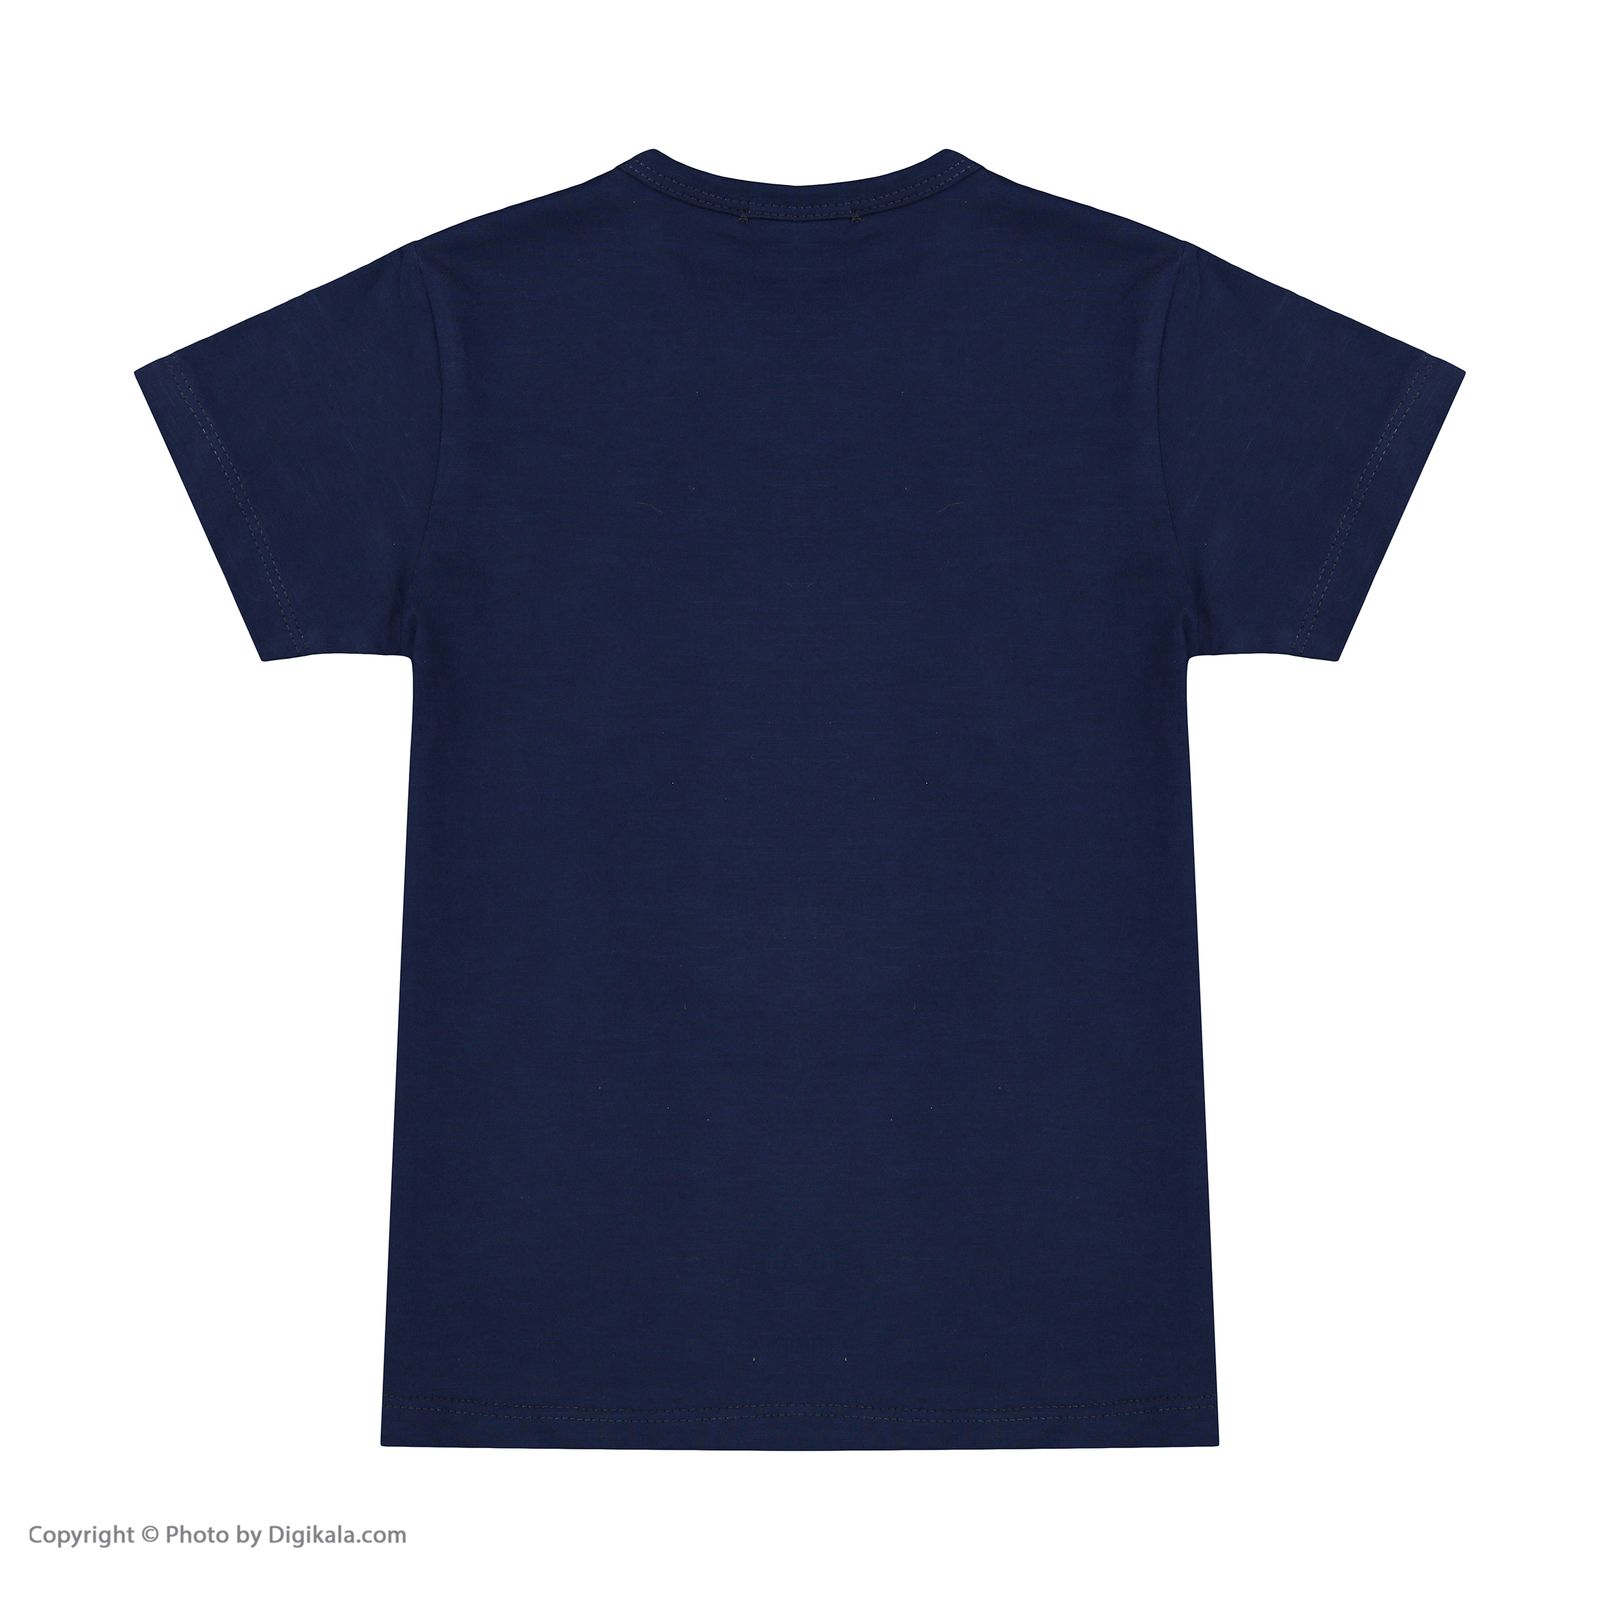 تی شرت بچگانه بی کی مدل 2211123-59 -  - 3